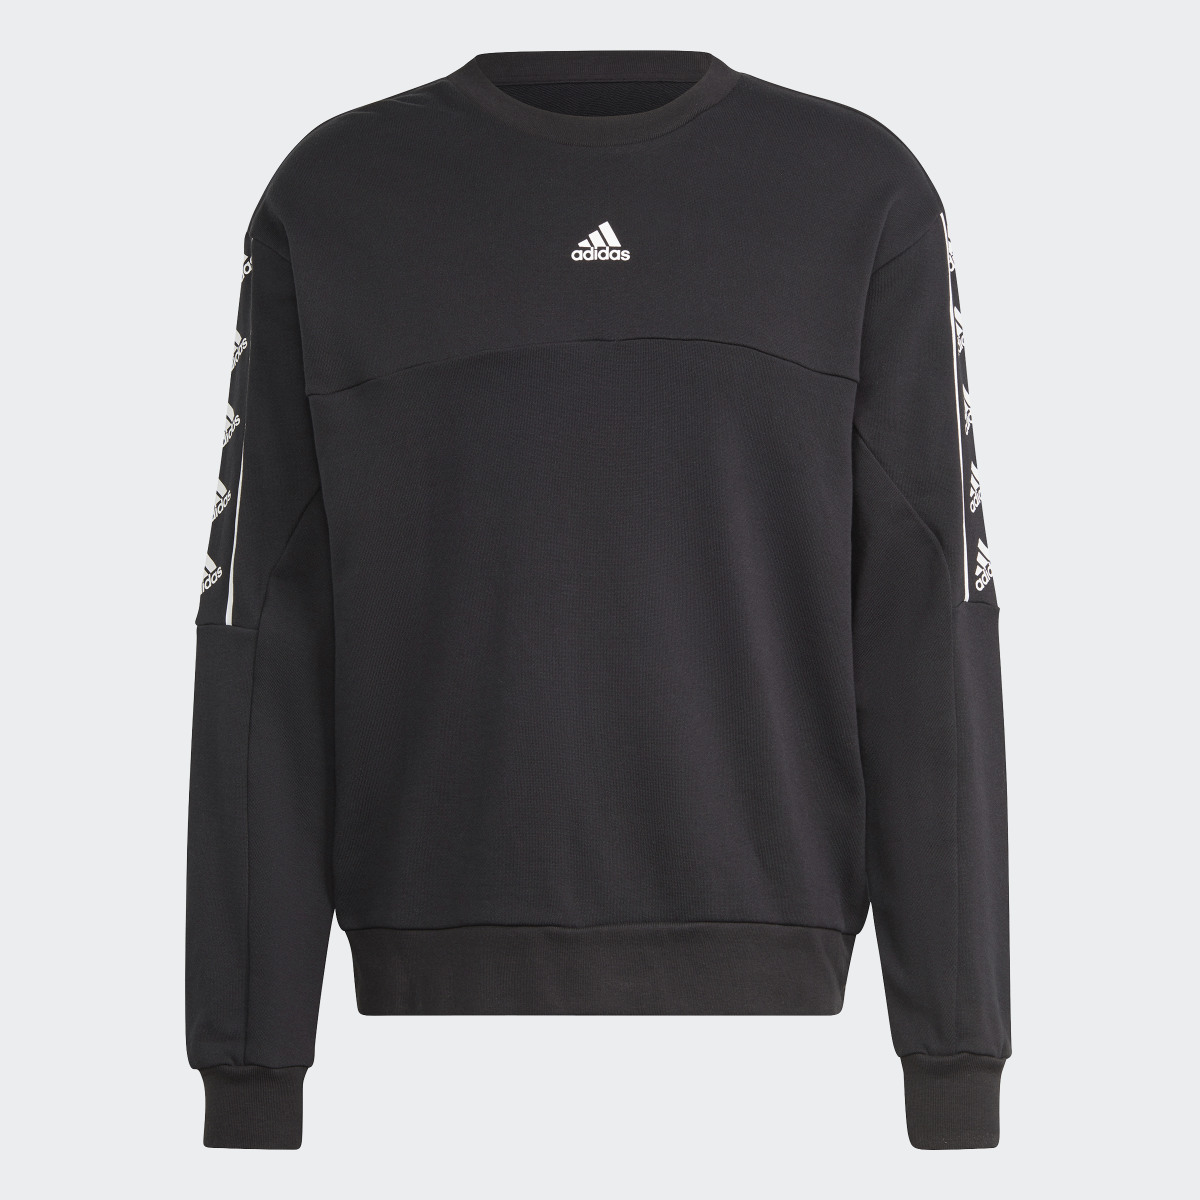 Adidas Brand Love Sweatshirt. 5